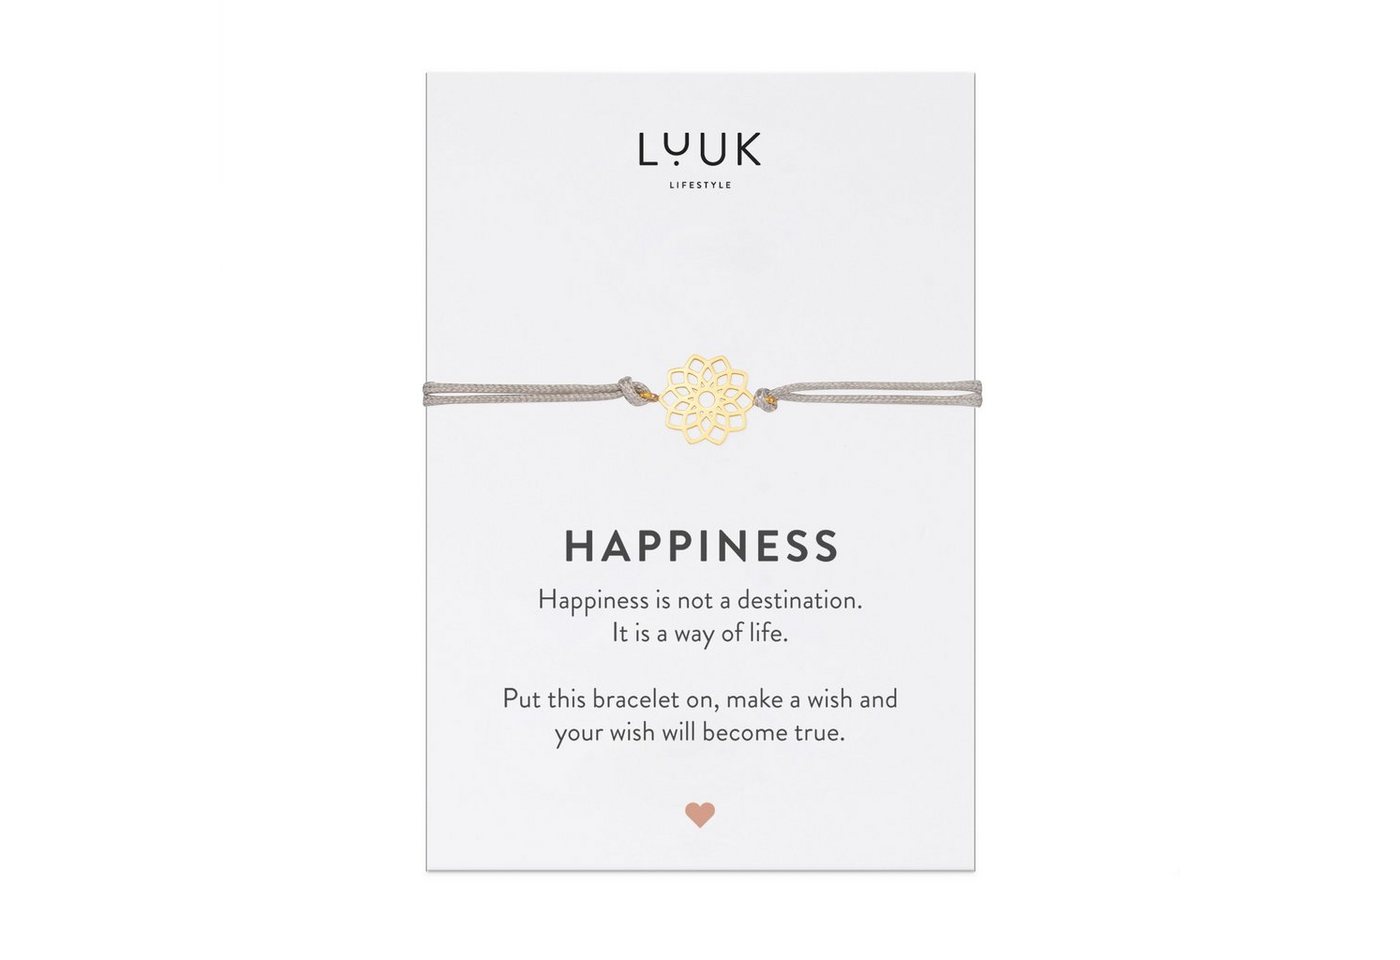 LUUK LIFESTYLE Freundschaftsarmband Mandala, handmade, mit Happiness Spruchkarte von LUUK LIFESTYLE